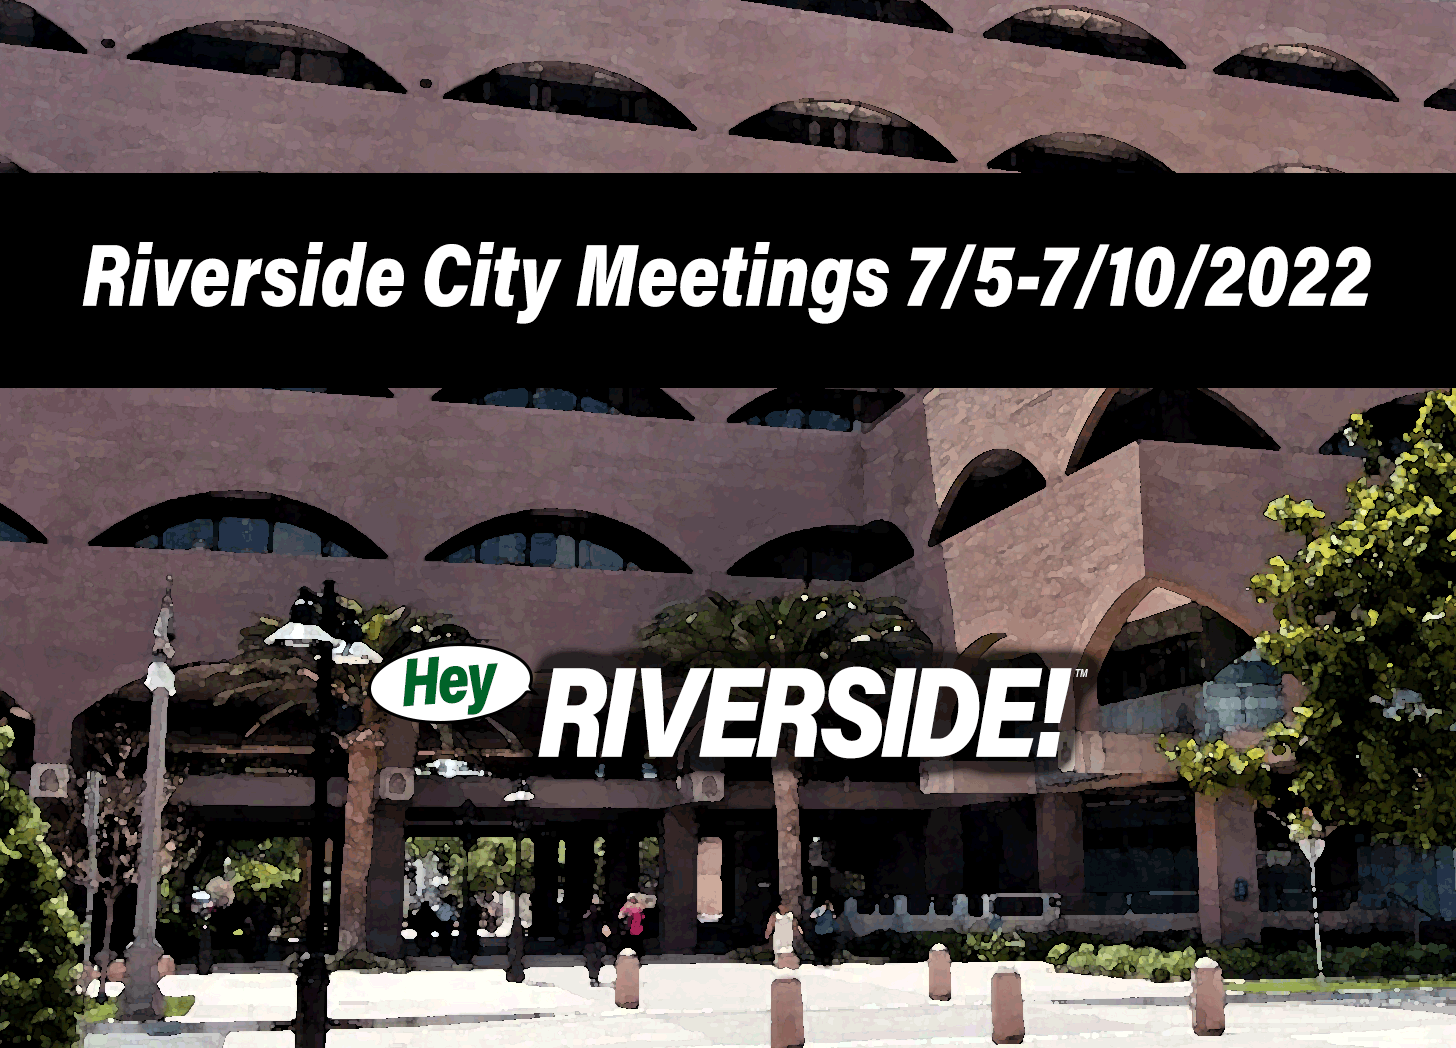 Riverside City Meetings July 4th through July 10th 2022